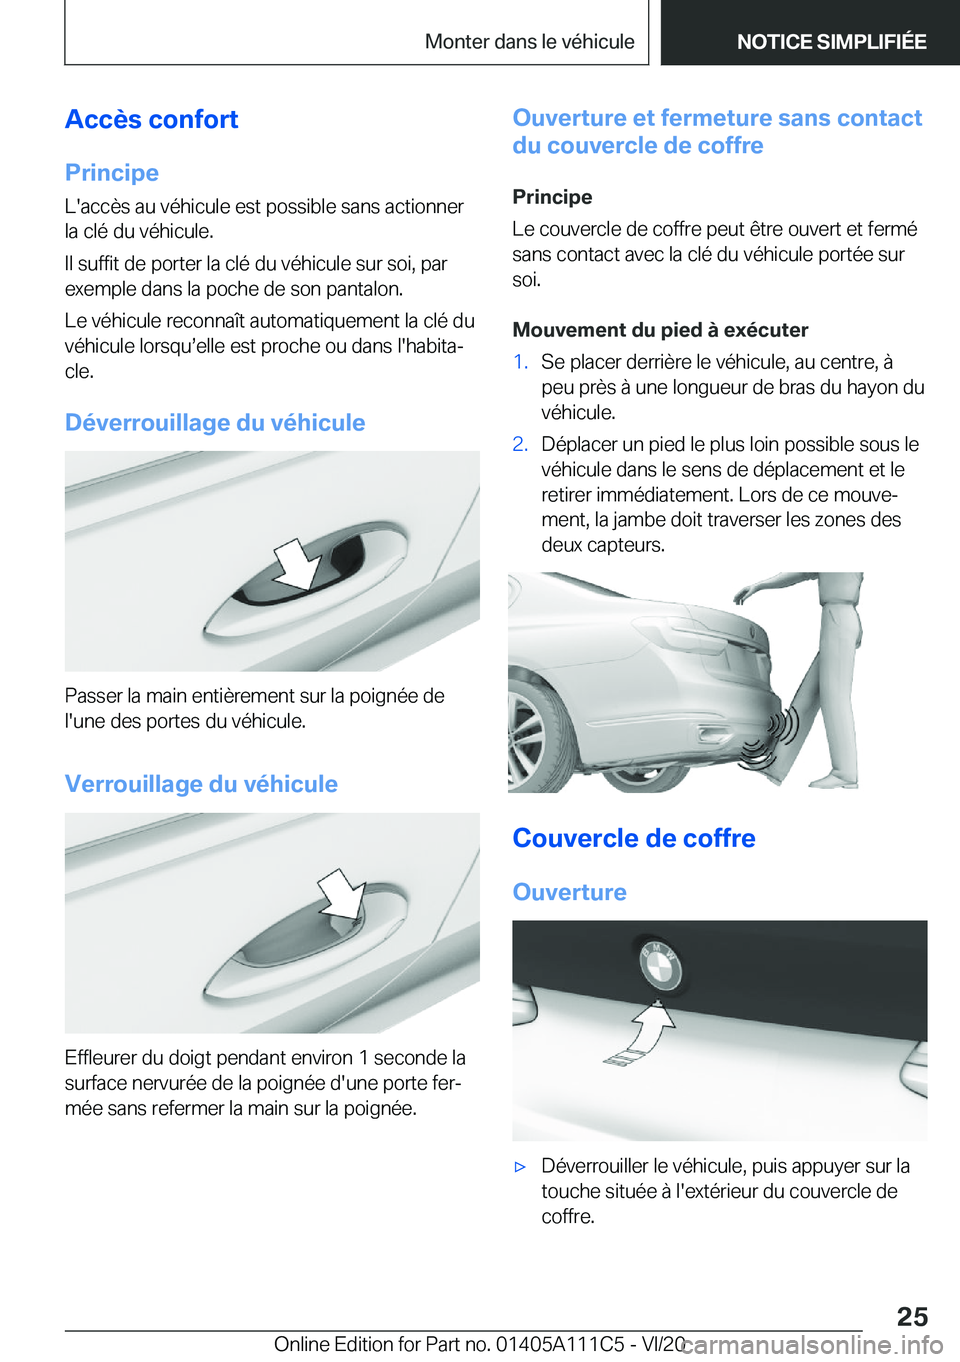 BMW 3 SERIES SEDAN PLUG-IN HYBRID 2021  Notices Demploi (in French) �A�c�c�è�s��c�o�n�f�o�r�t
�P�r�i�n�c�i�p�e �L�'�a�c�c�è�s��a�u��v�é�h�i�c�u�l�e��e�s�t��p�o�s�s�i�b�l�e��s�a�n�s��a�c�t�i�o�n�n�e�r�l�a��c�l�é��d�u��v�é�h�i�c�u�l�e�.
�I�l��s�u�f�f